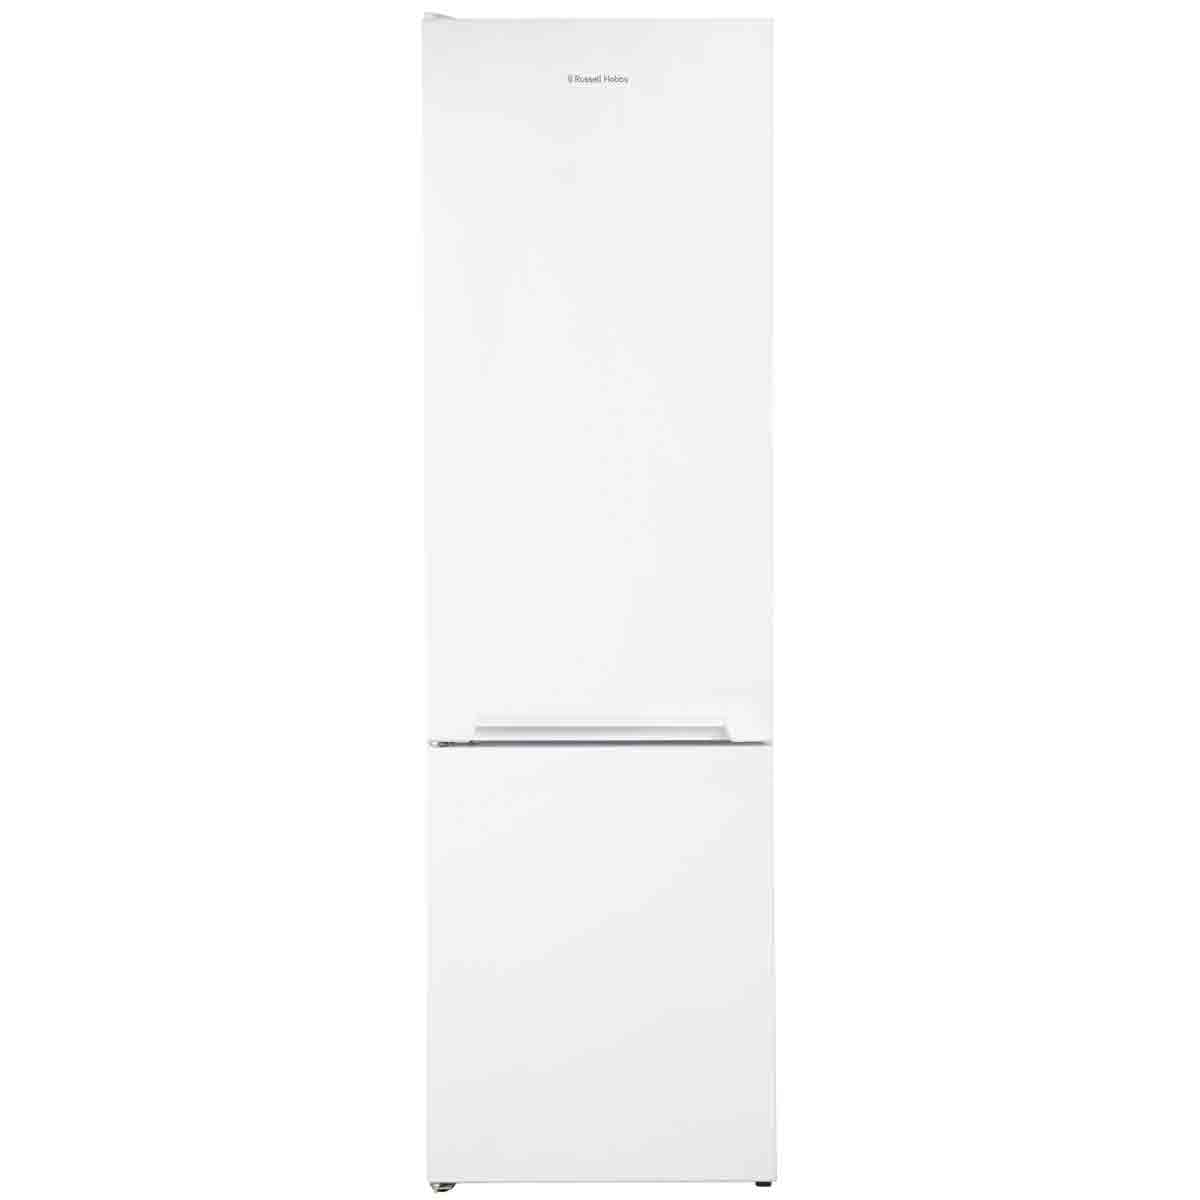 Russell Hobbs RH54FF180 288L 54Cm Wide Freestanding Fridge Freezer - White